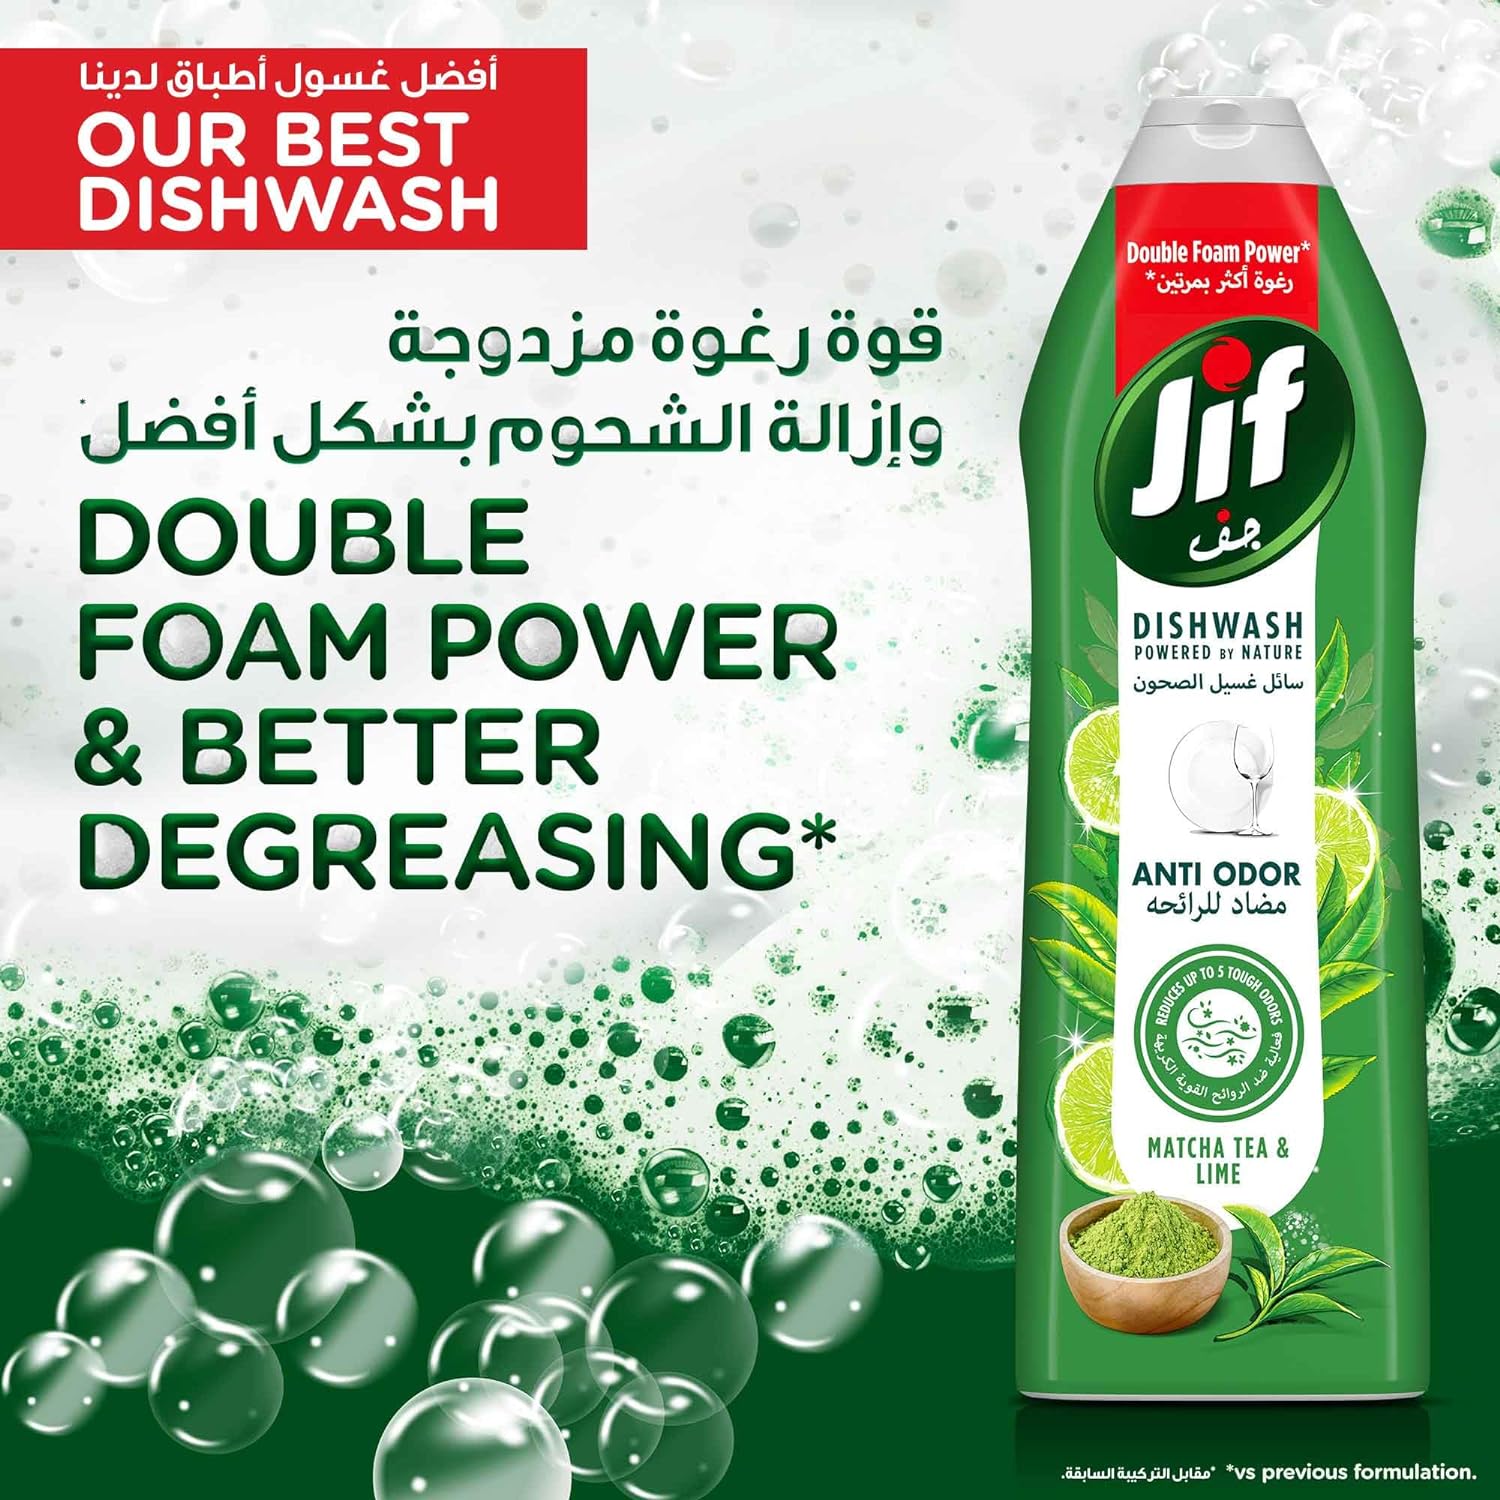 JIF Antibacterial Dishwashing liquid for 100% Grease Removal, Mint & Lemon, Double Foam Power, 750ml